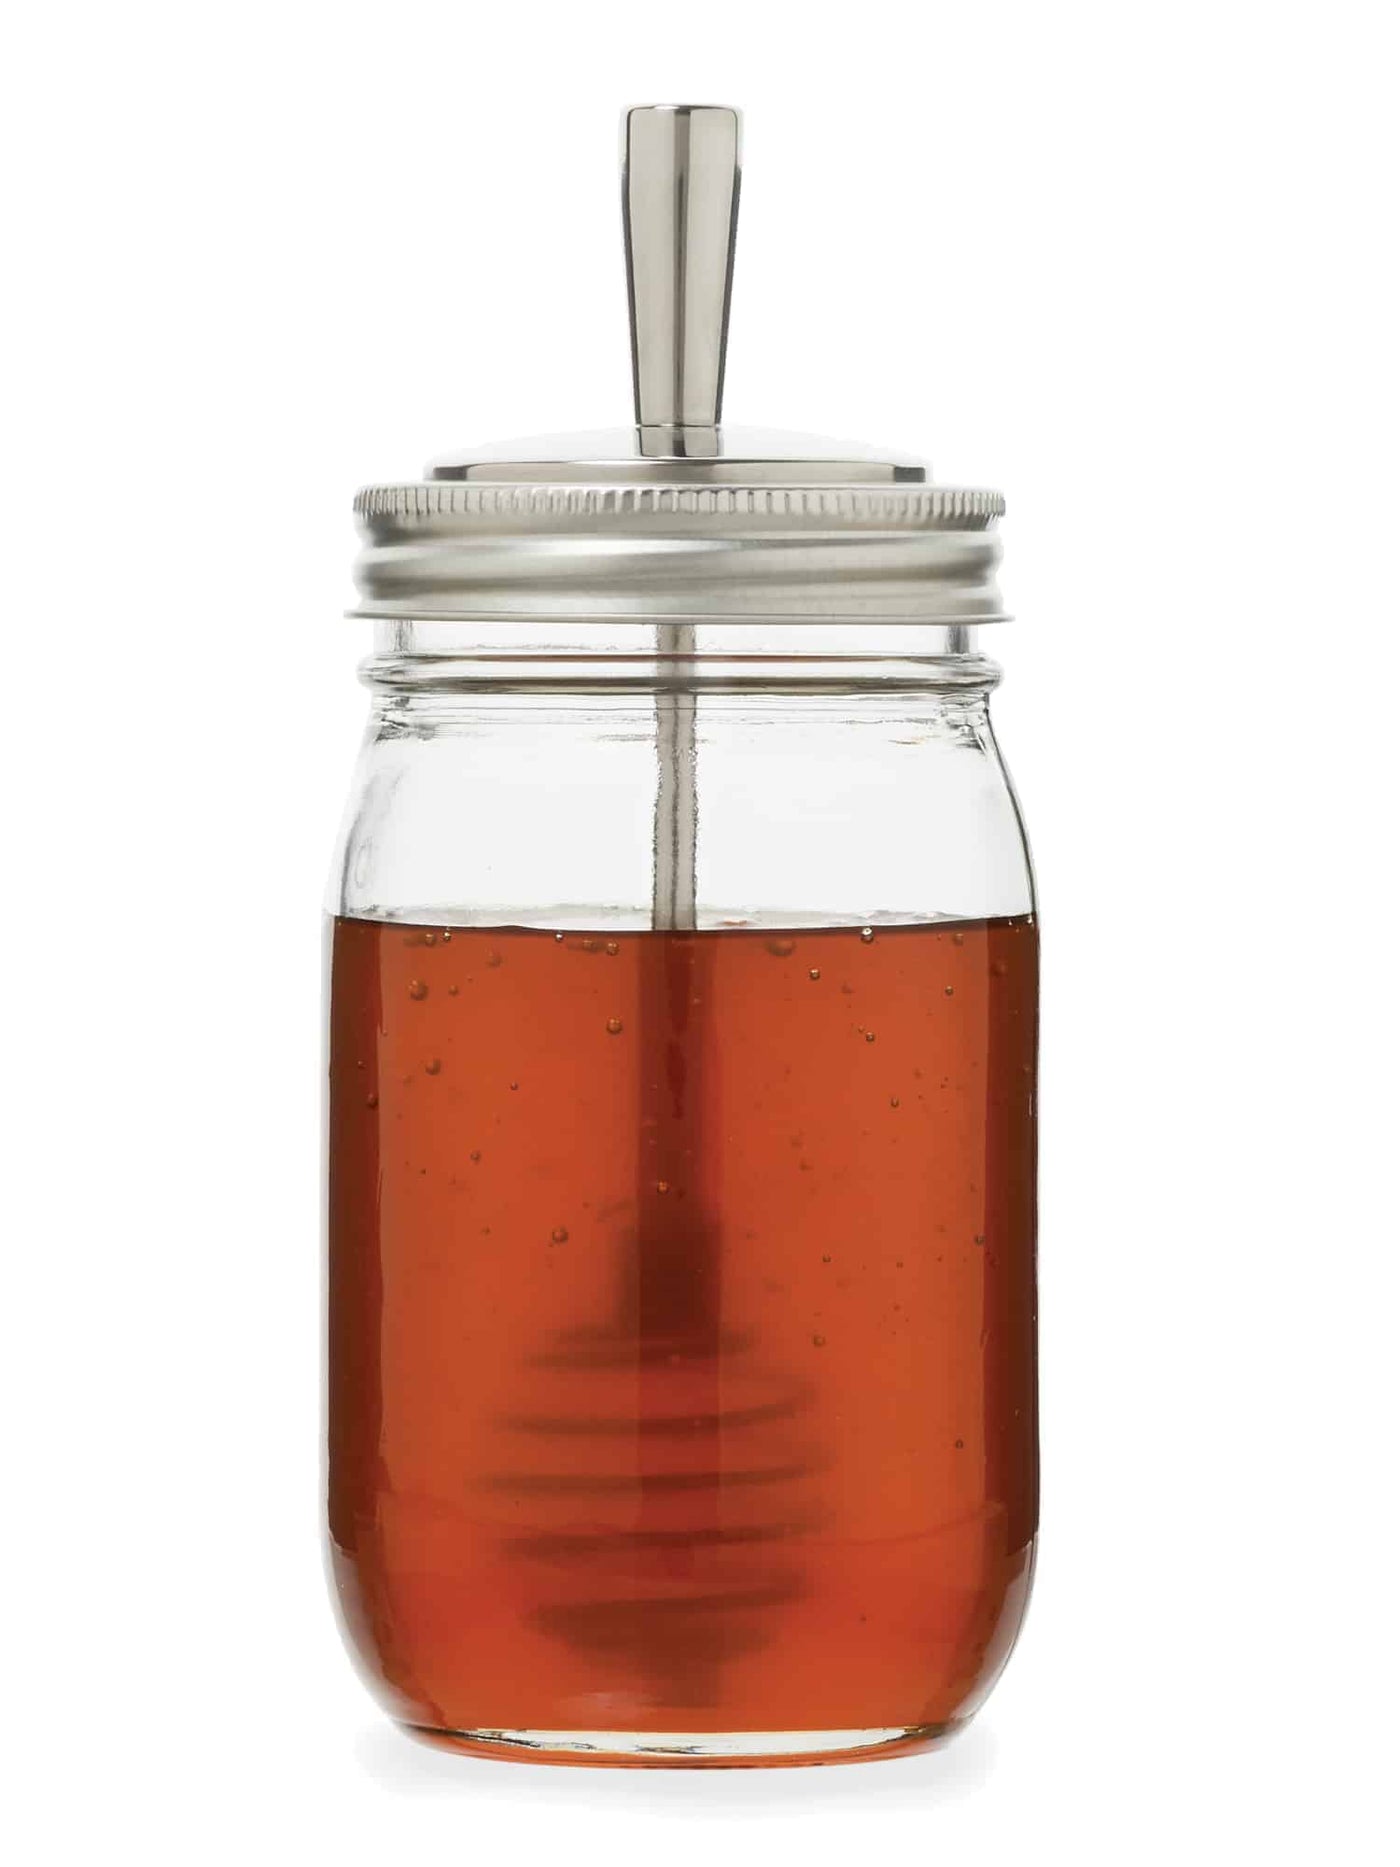 Jarware Stainless Steel Honey Dipper Lid for Mason Jars